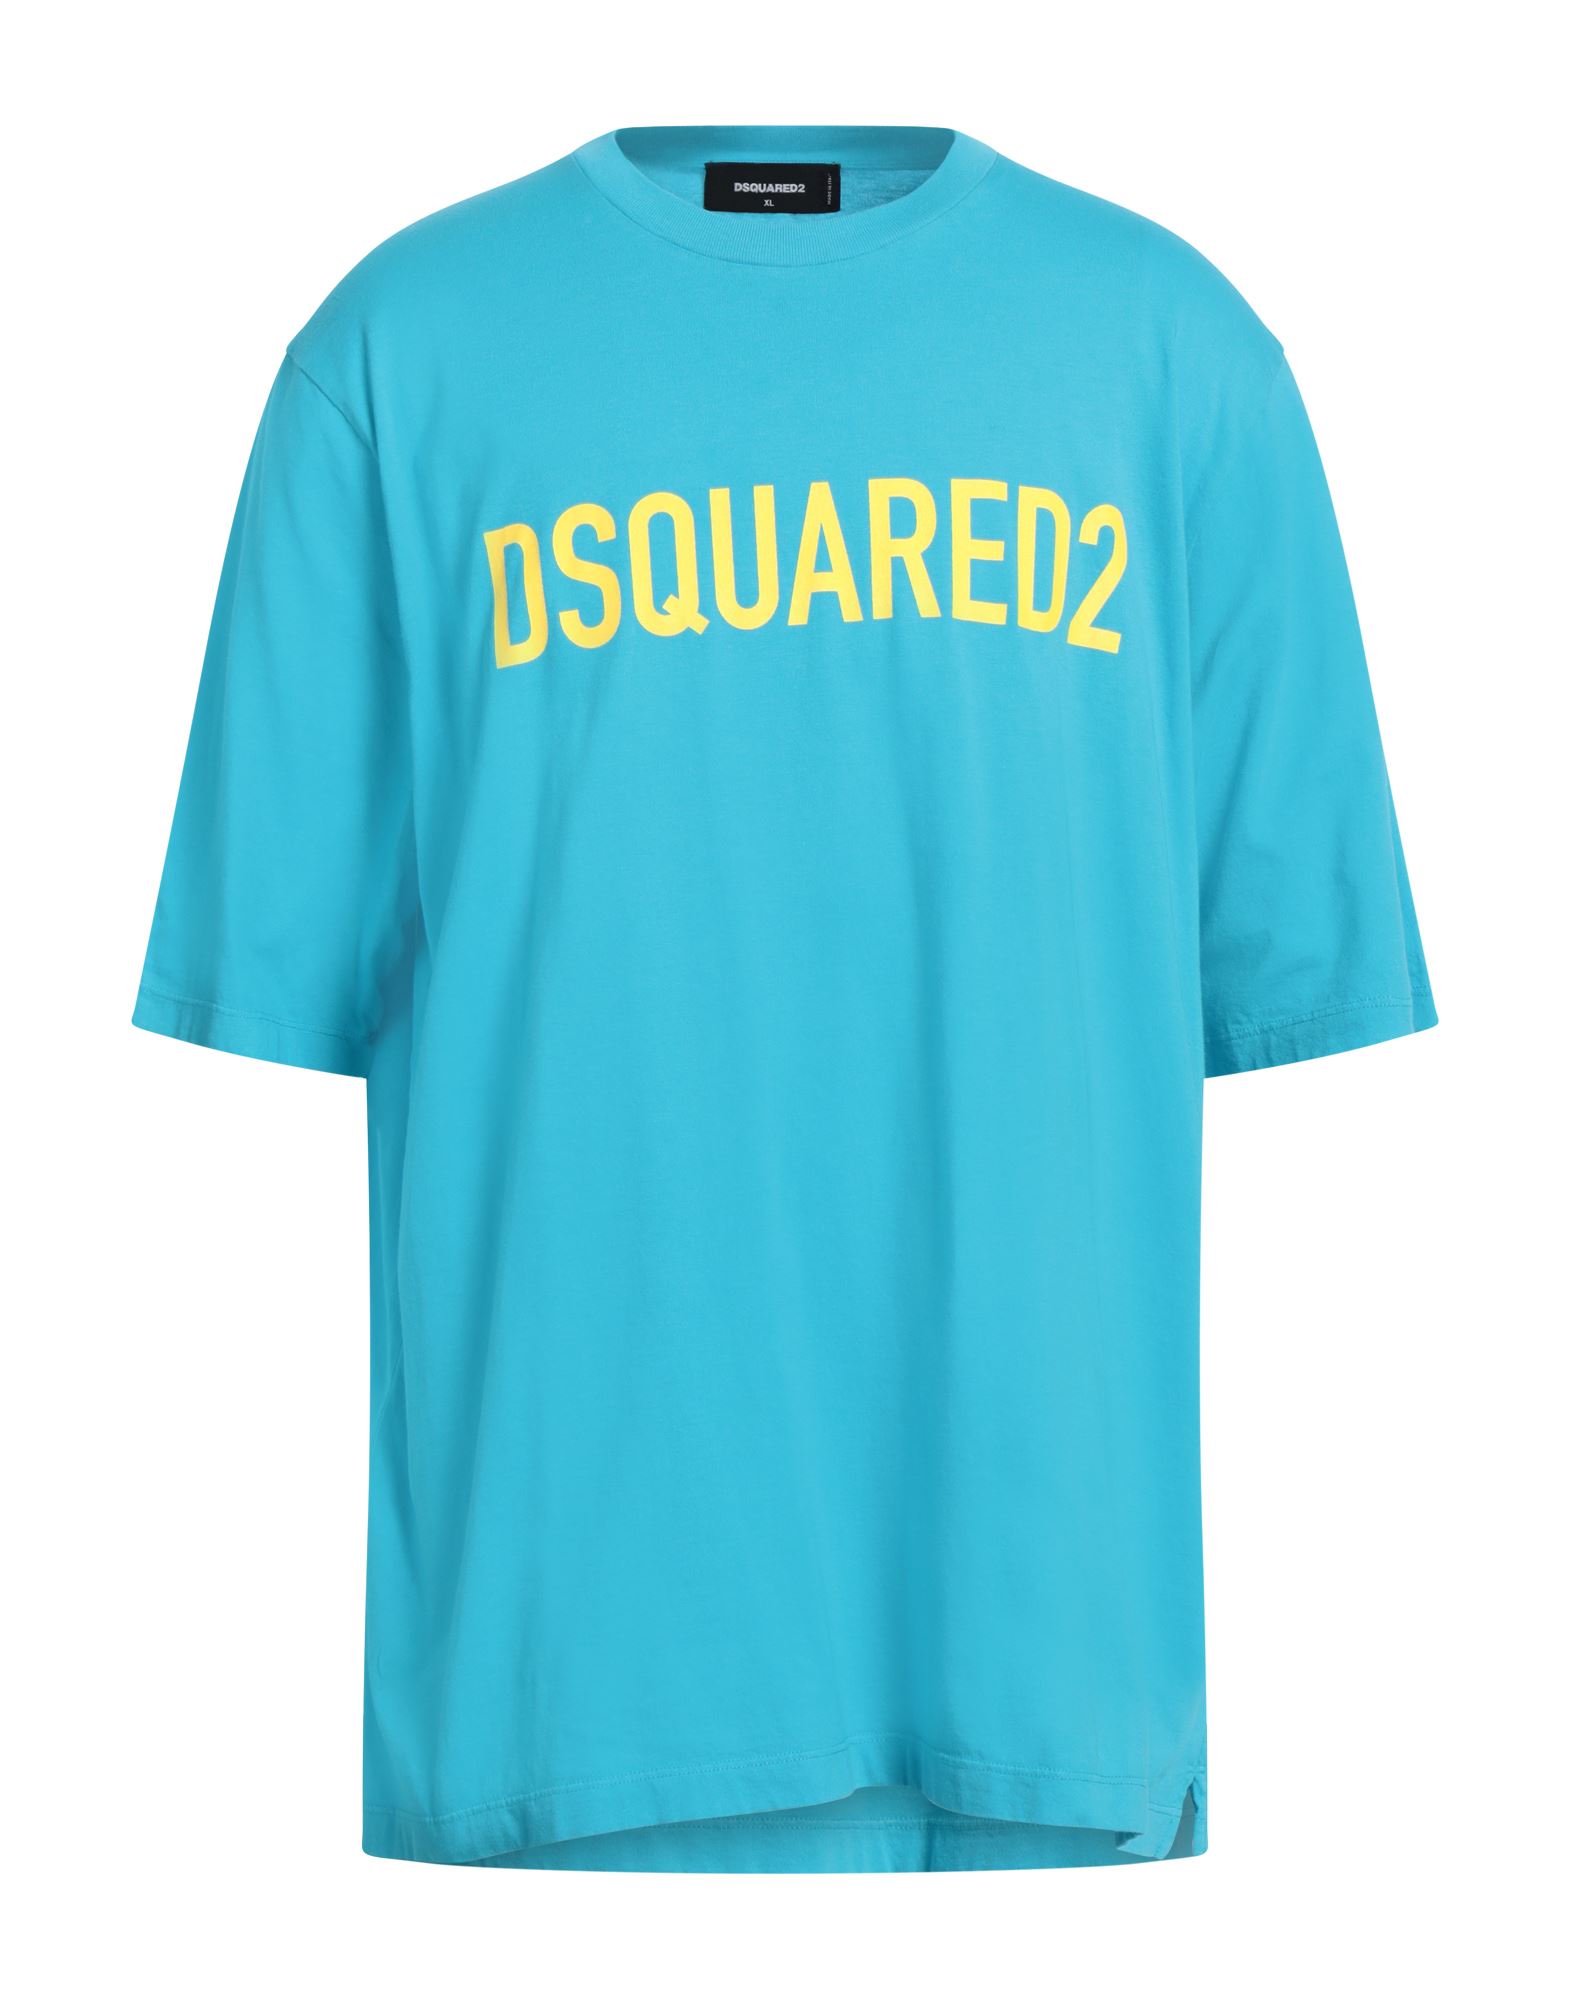 DSQUARED2 T-shirts Herren Azurblau von DSQUARED2